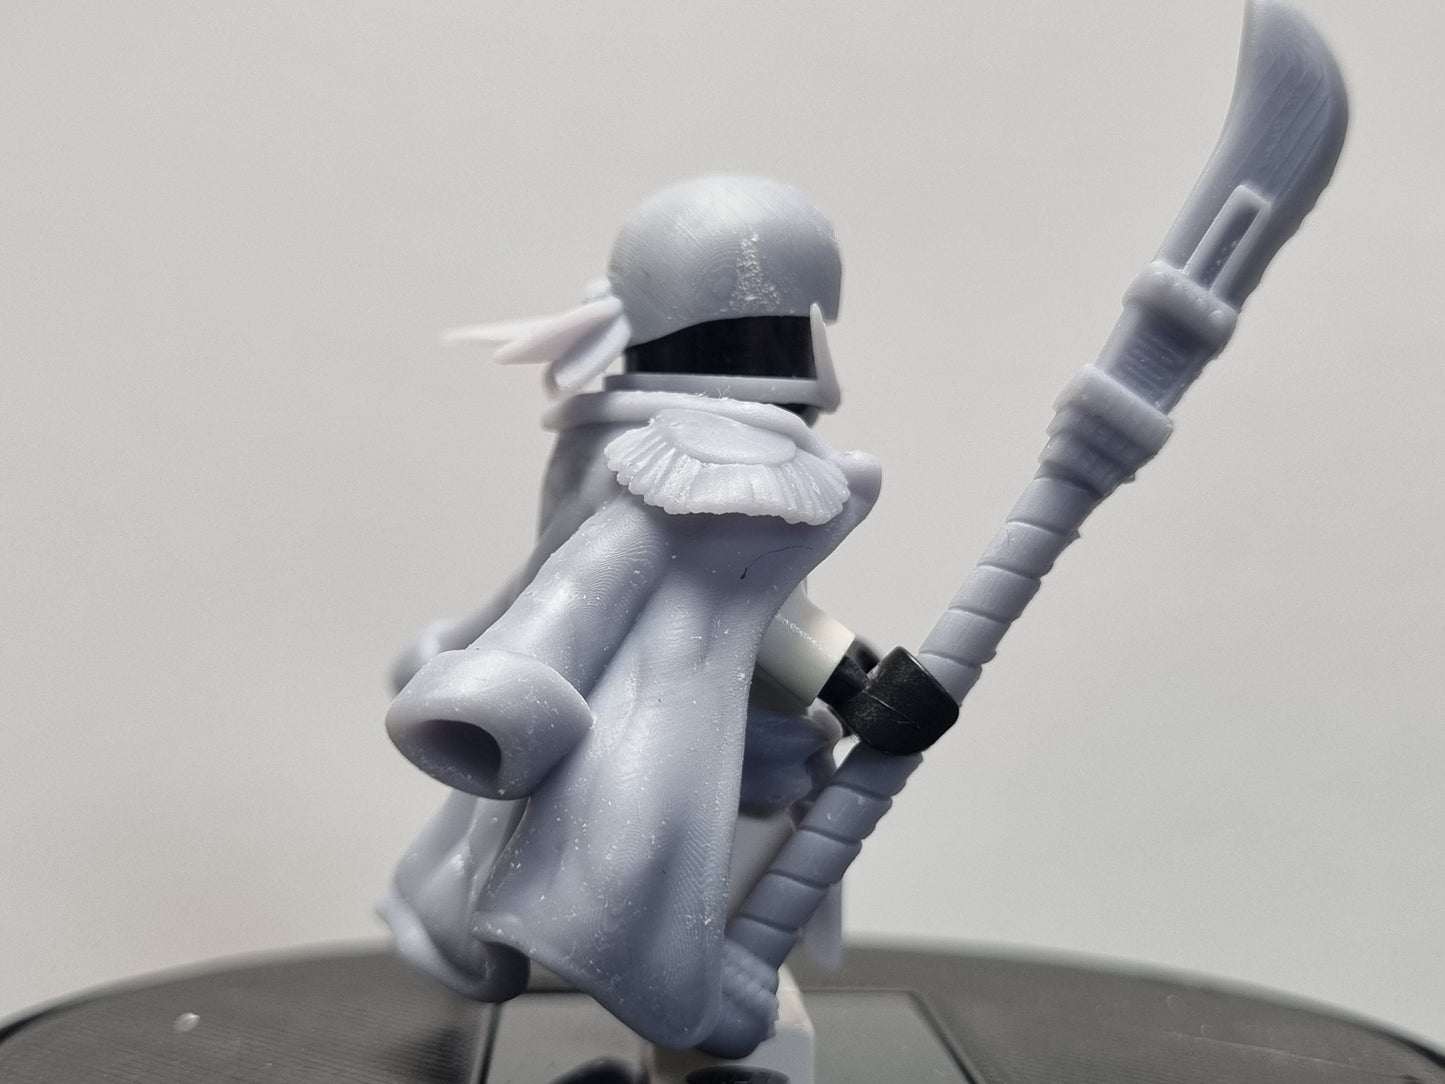 Building toy custom 3D printed mustage man set!